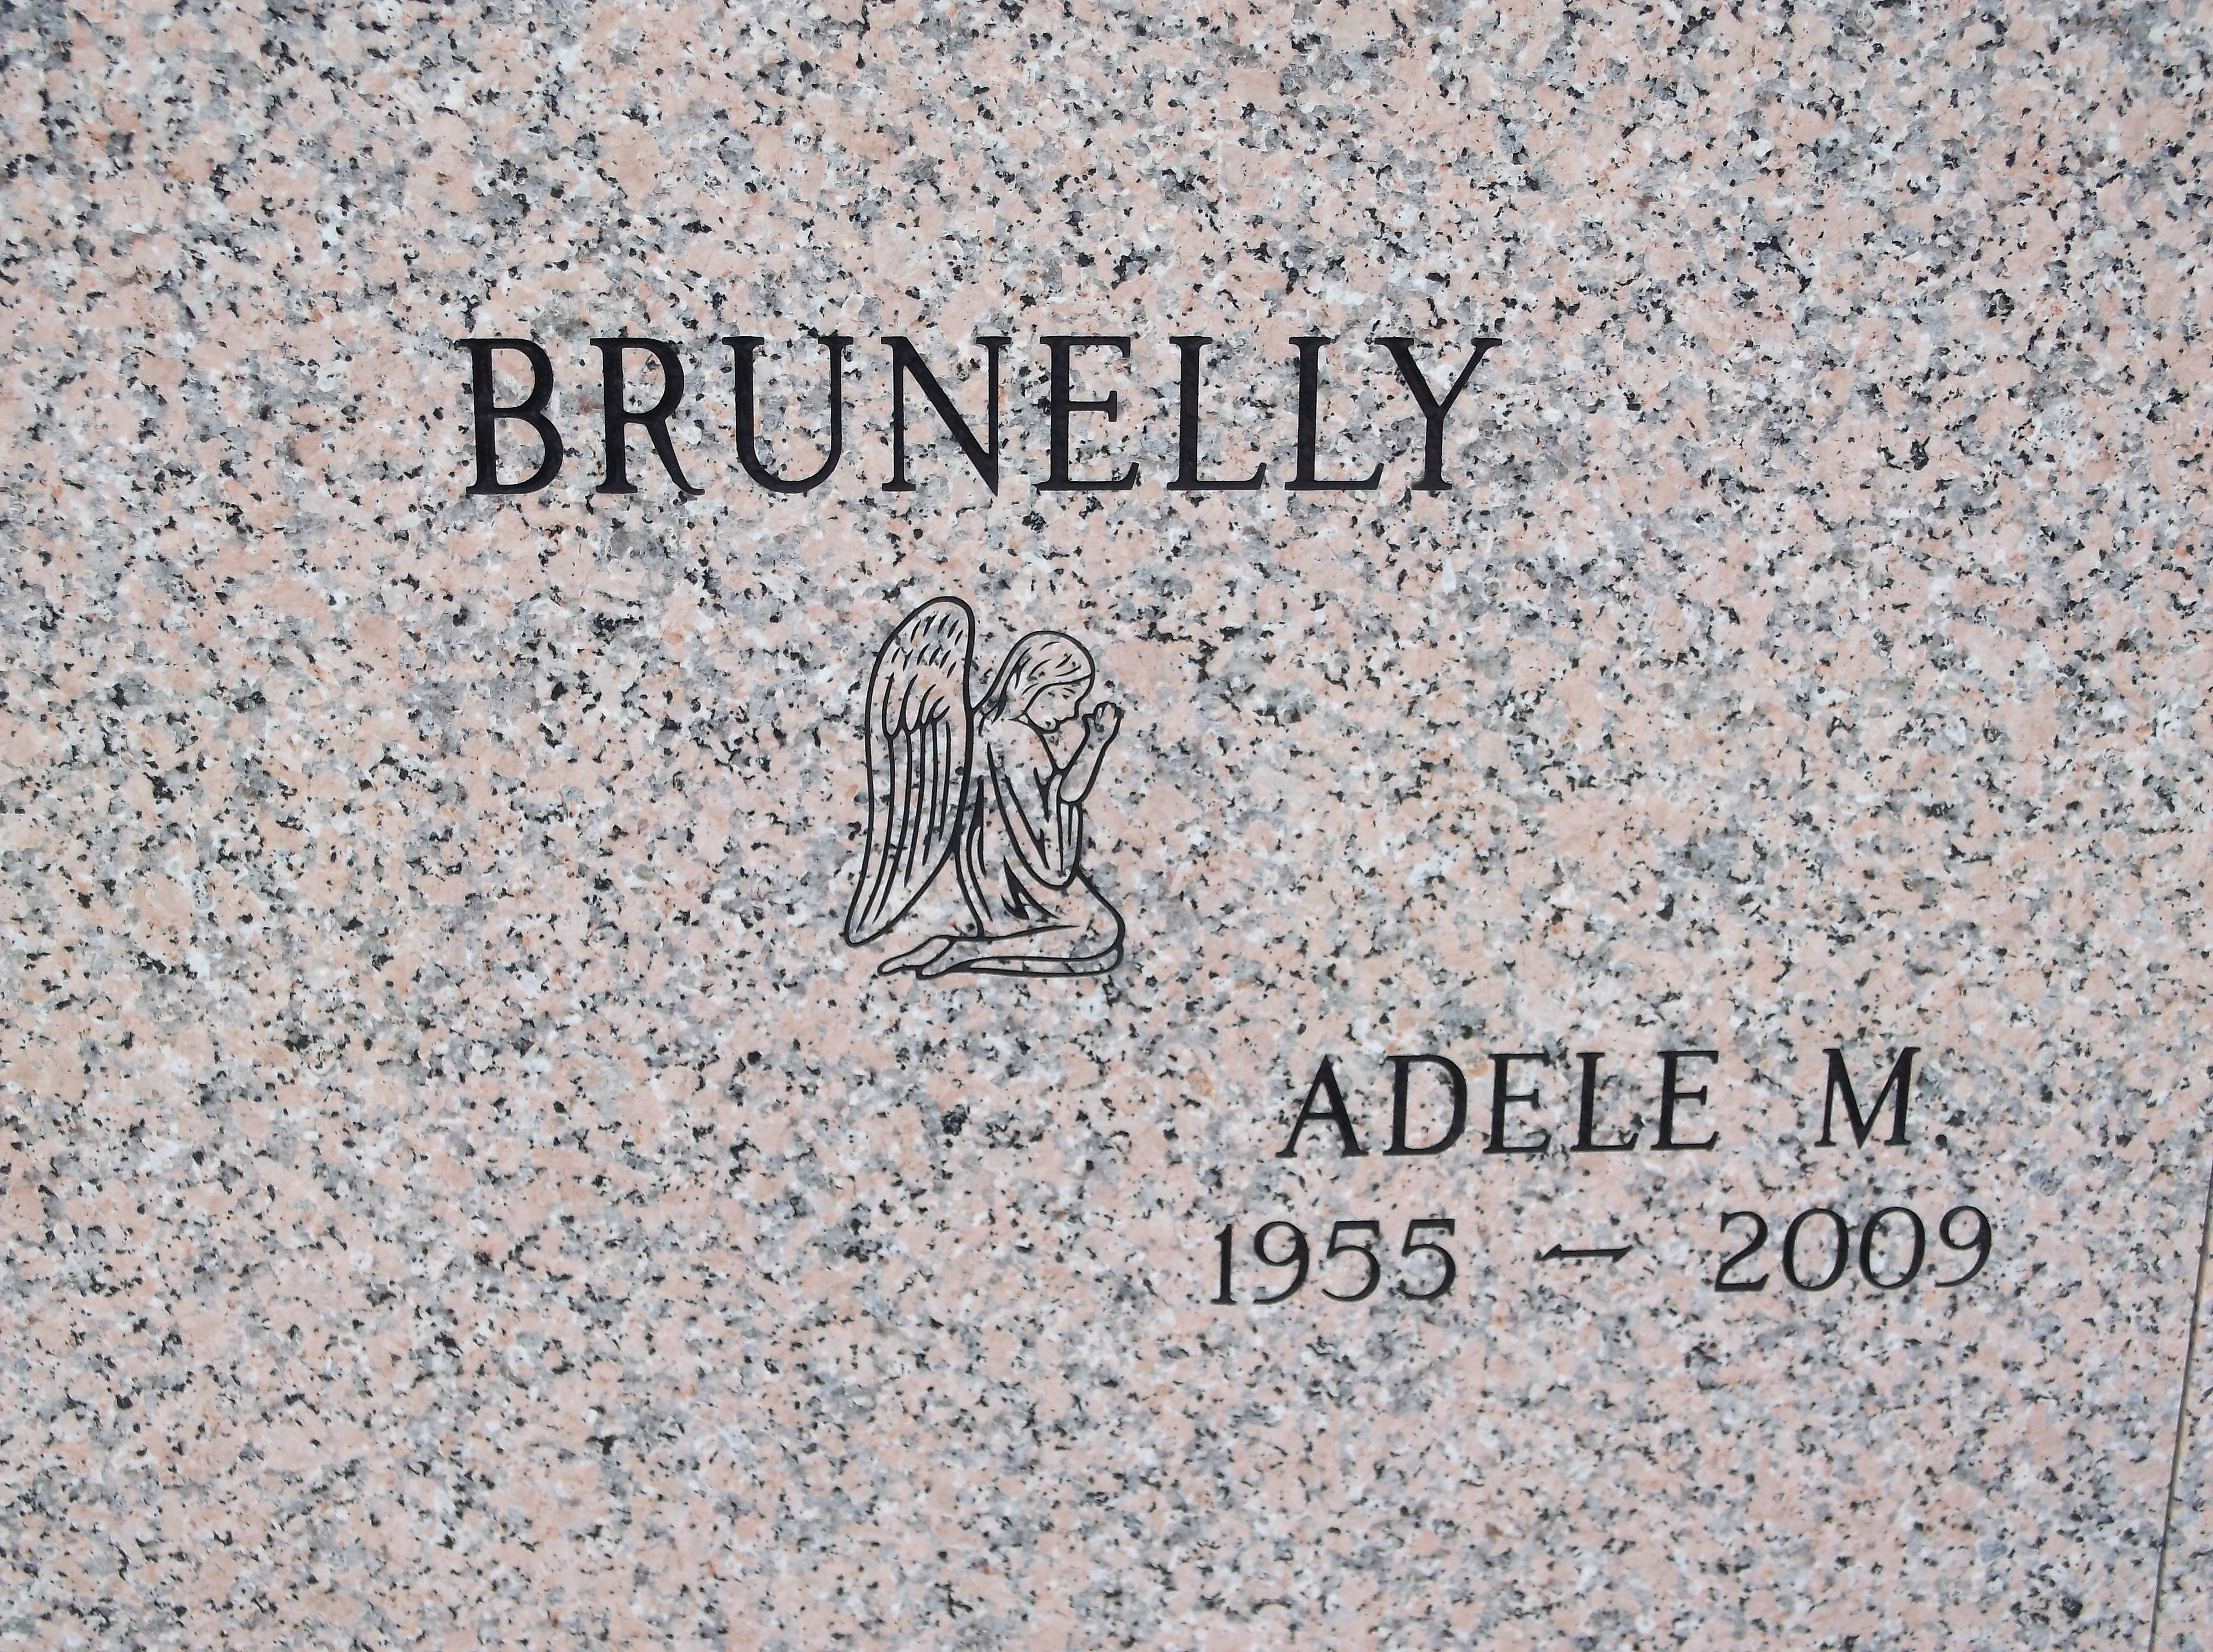 Adele M Brunelly